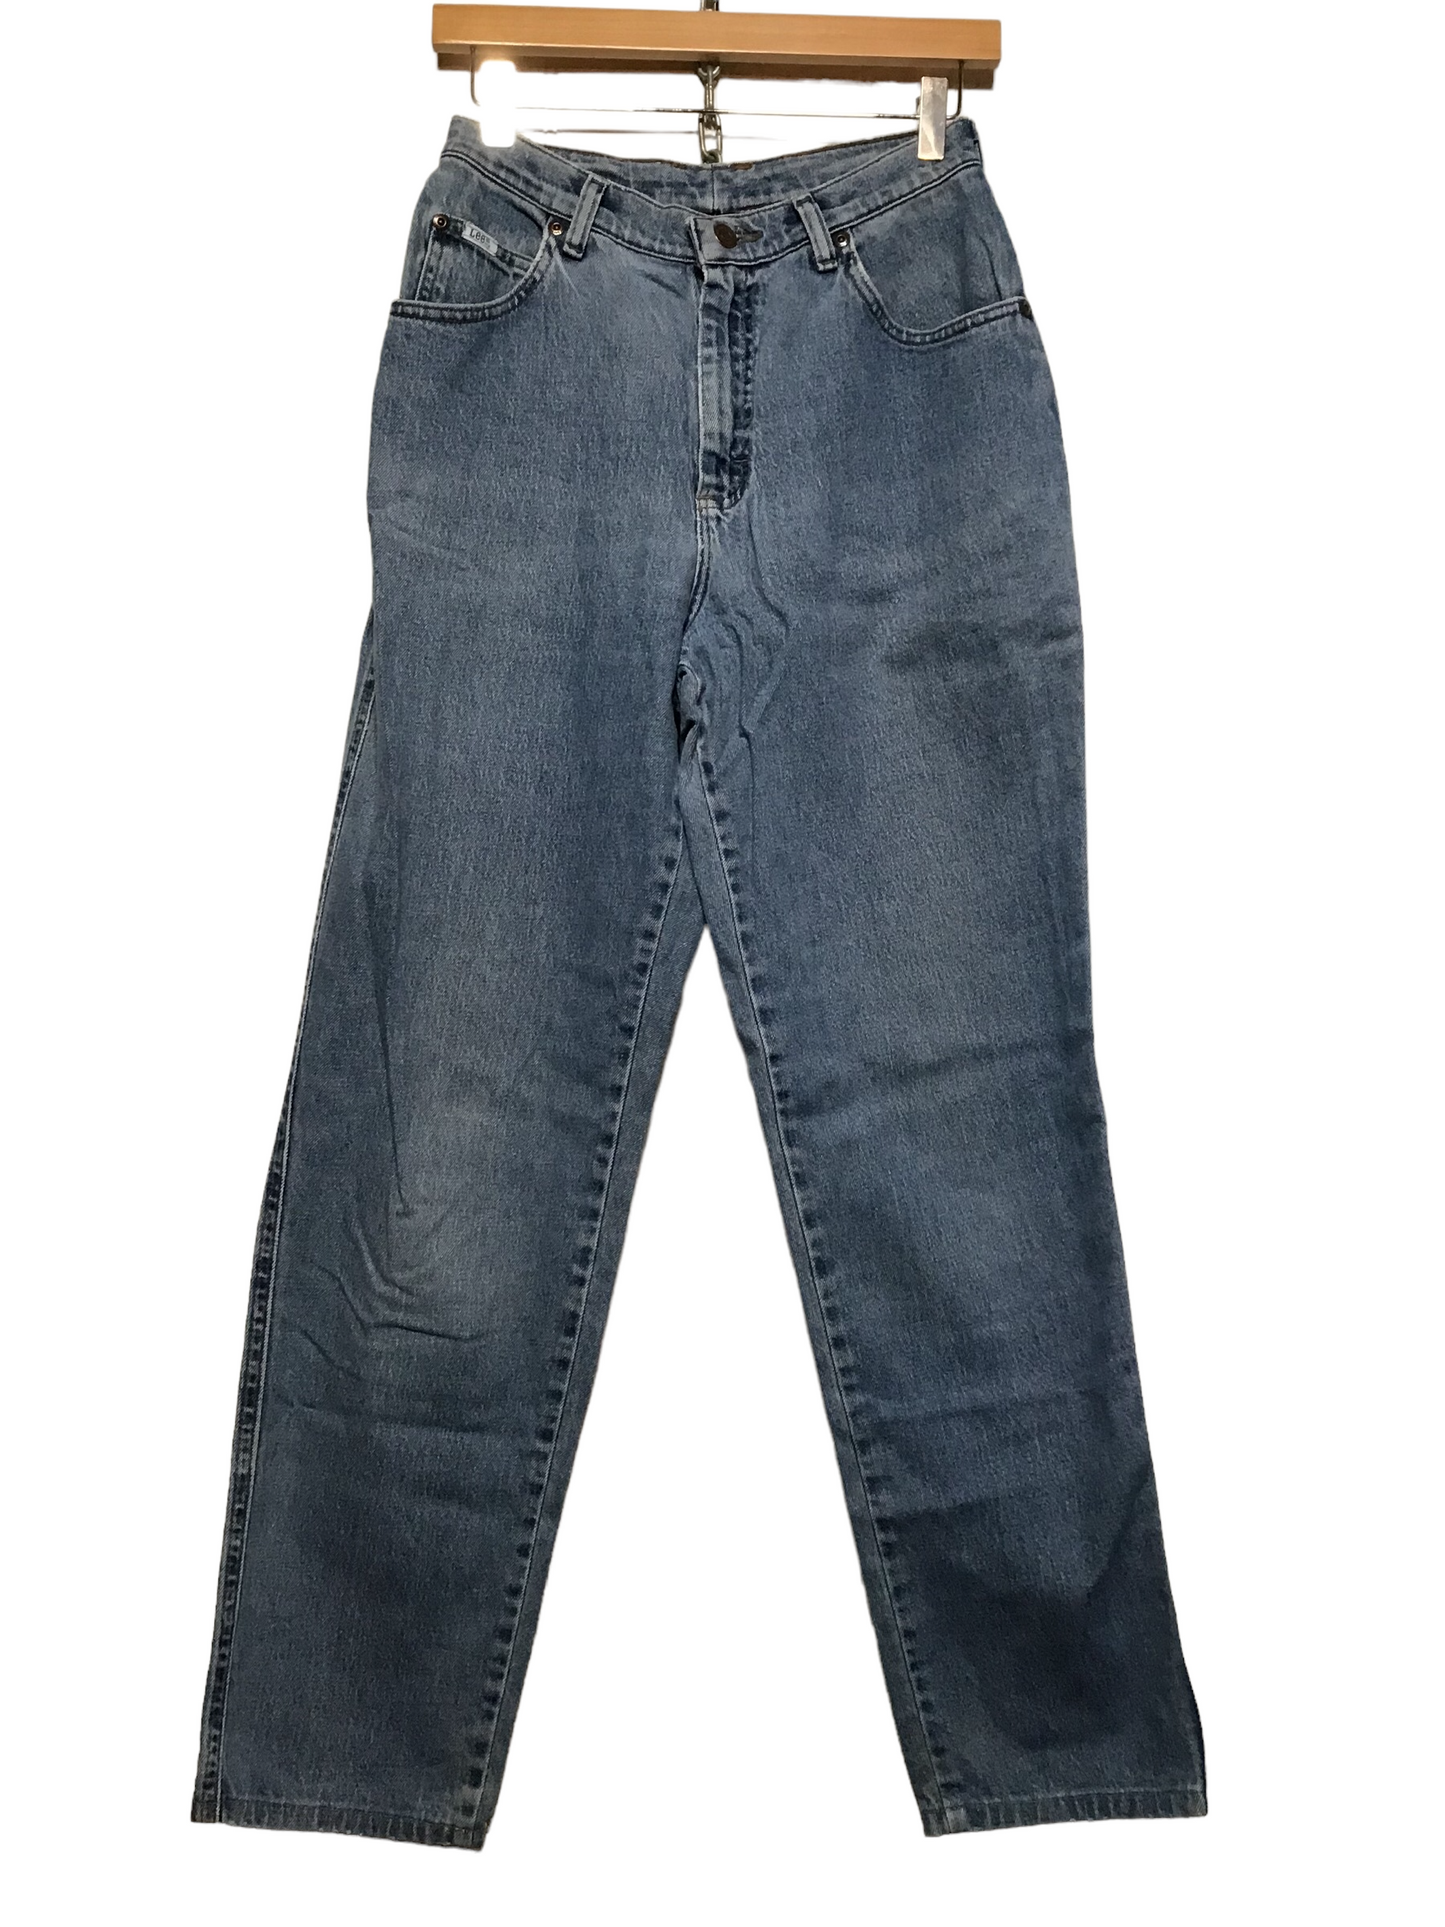 Lee Original Jeans (26X30)